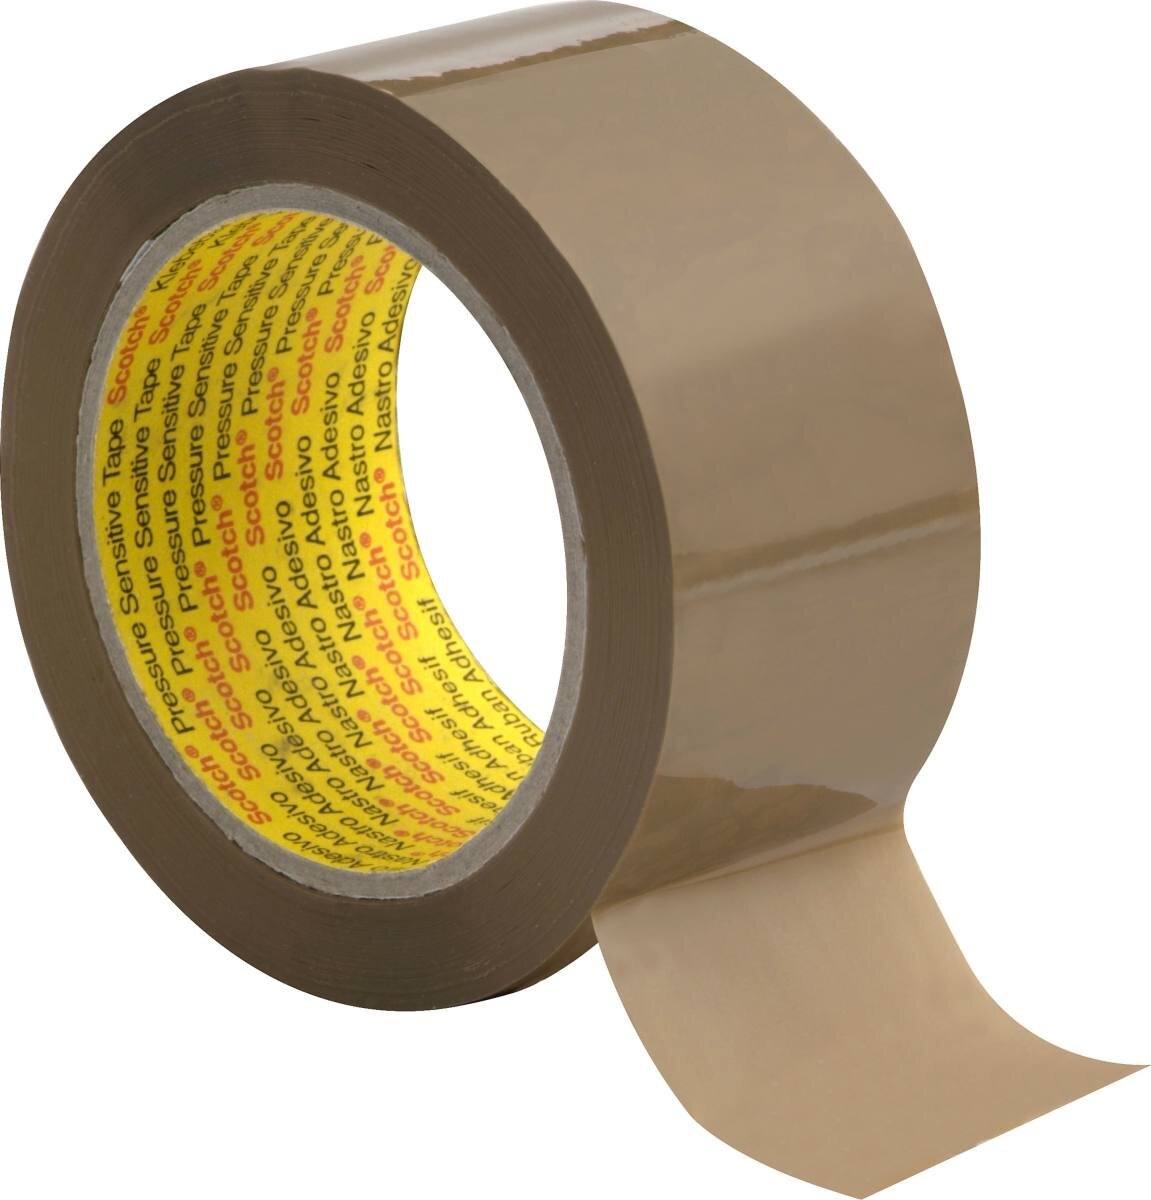 3M Scotch packaging tape 3739, brown, 75 mm x 990 m, 0.056 mm